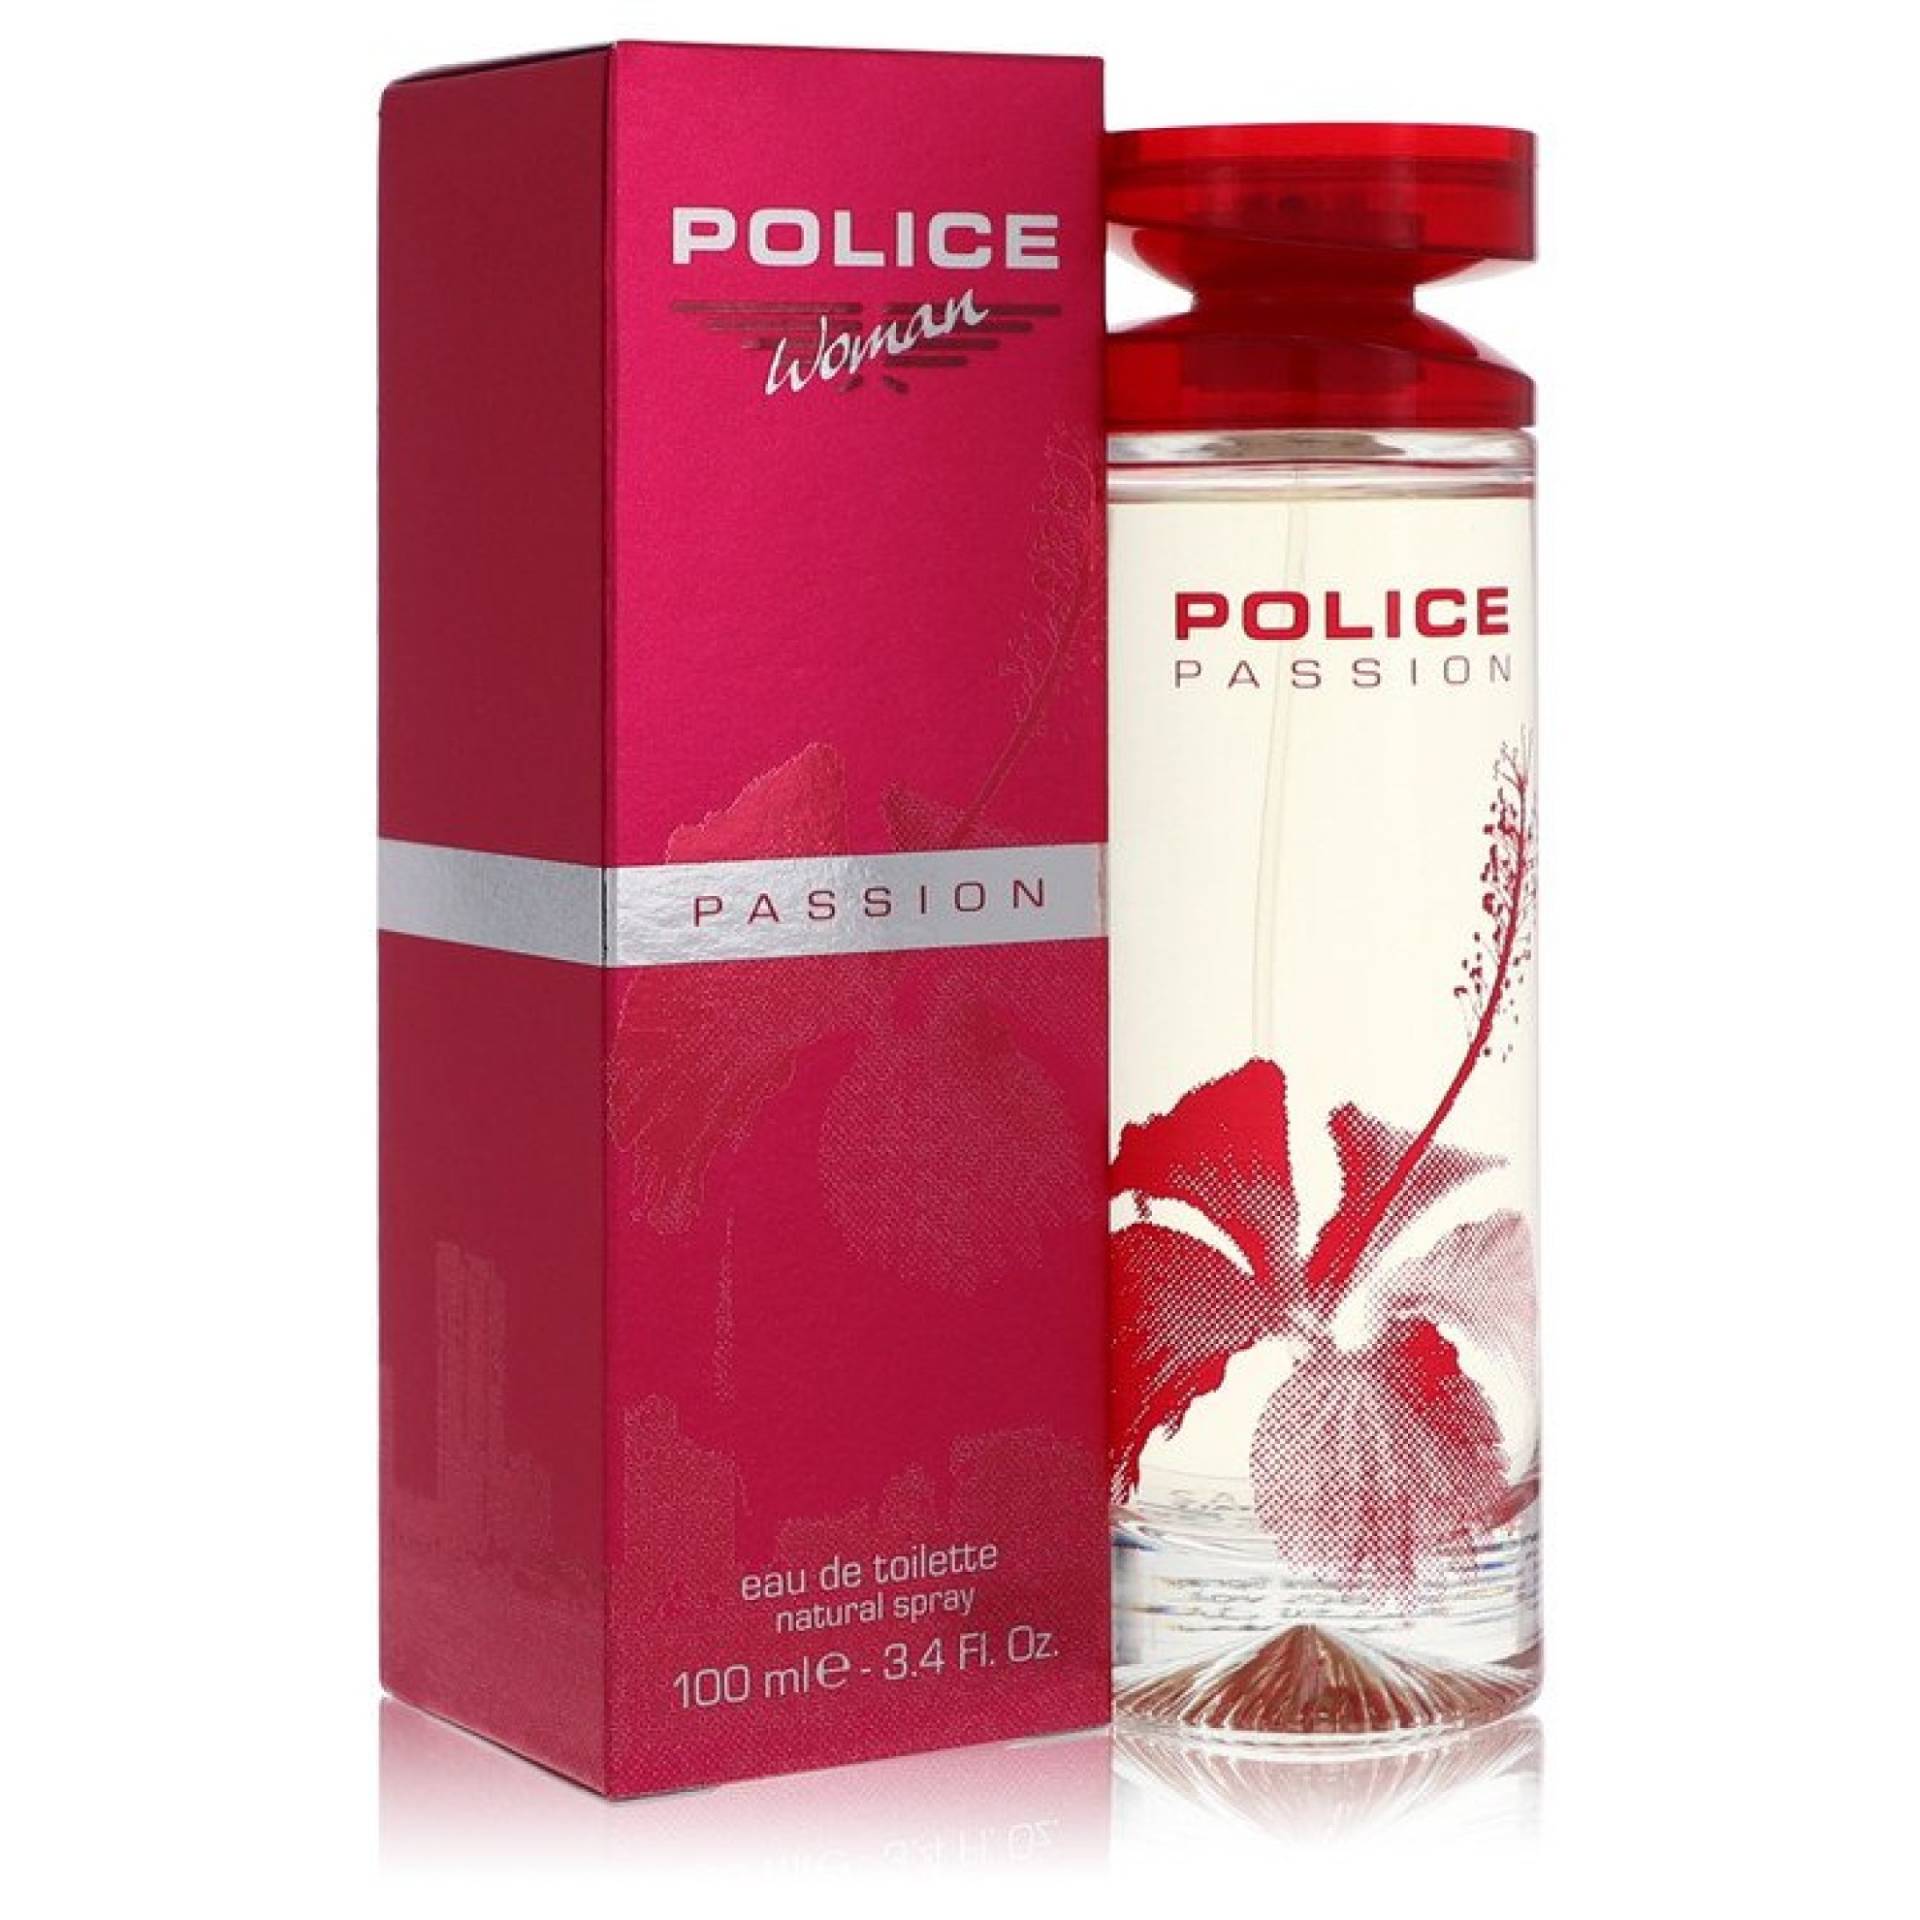 Police Colognes Police Passion Eau De Toilette Spray 100 ml von Police Colognes